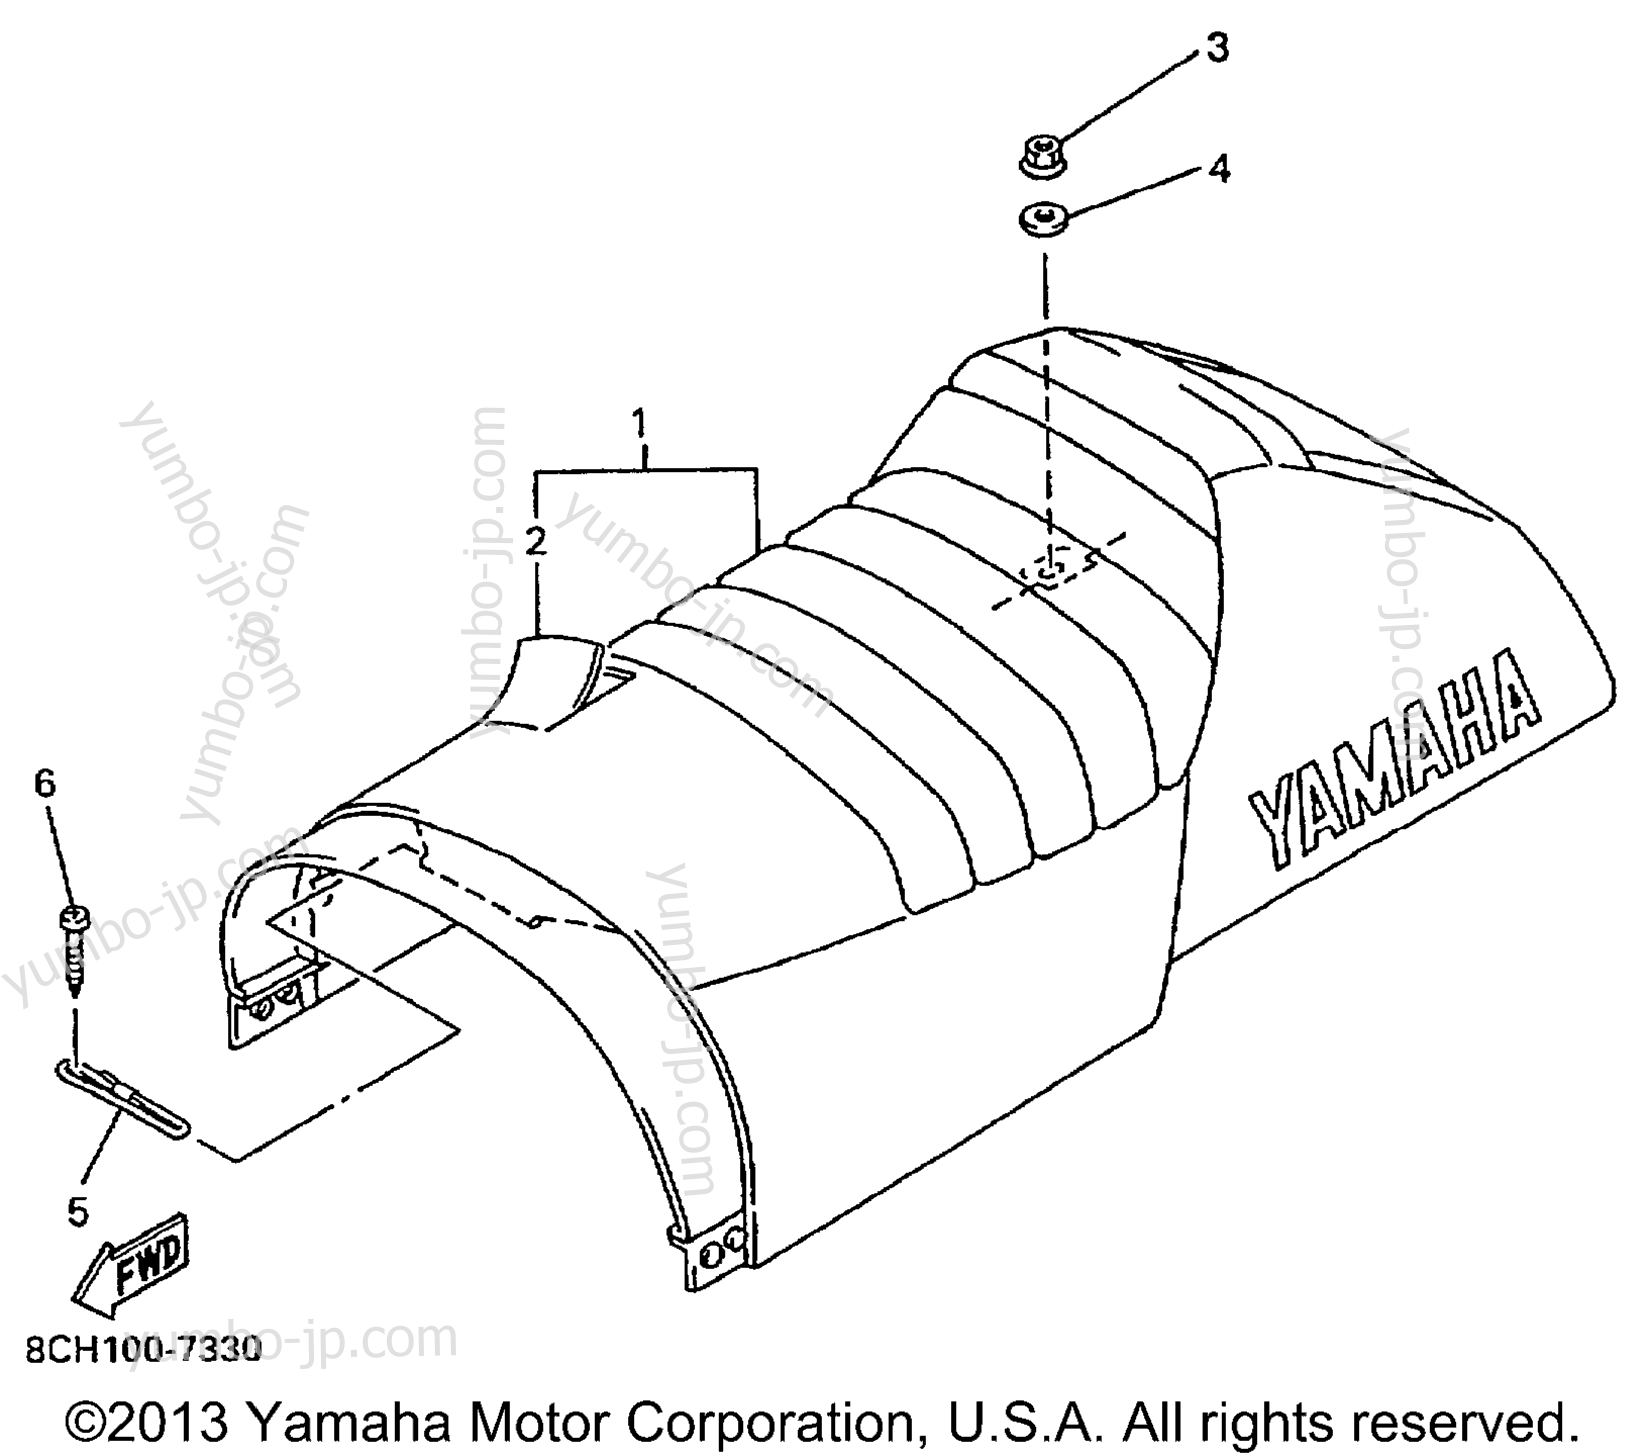 SEAT for snowmobiles YAMAHA VMAX 700 SXS (OHLINS FR SHOCKS) (VX700SXSB) 1998 year